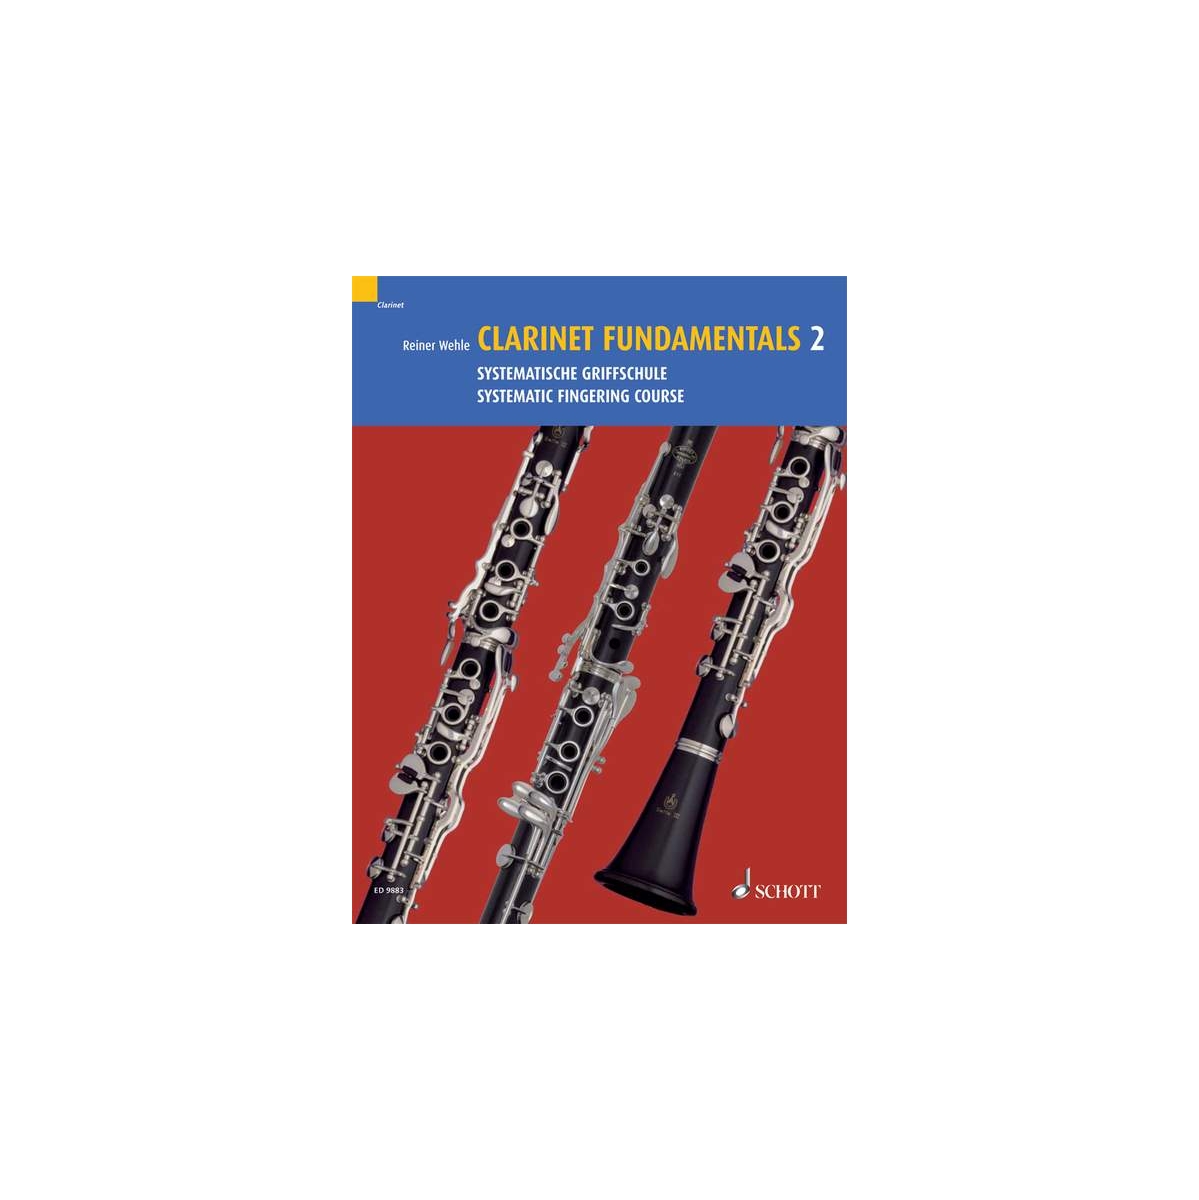 Clarinet Fundamentals Vol 2: Systematic Fingering Course